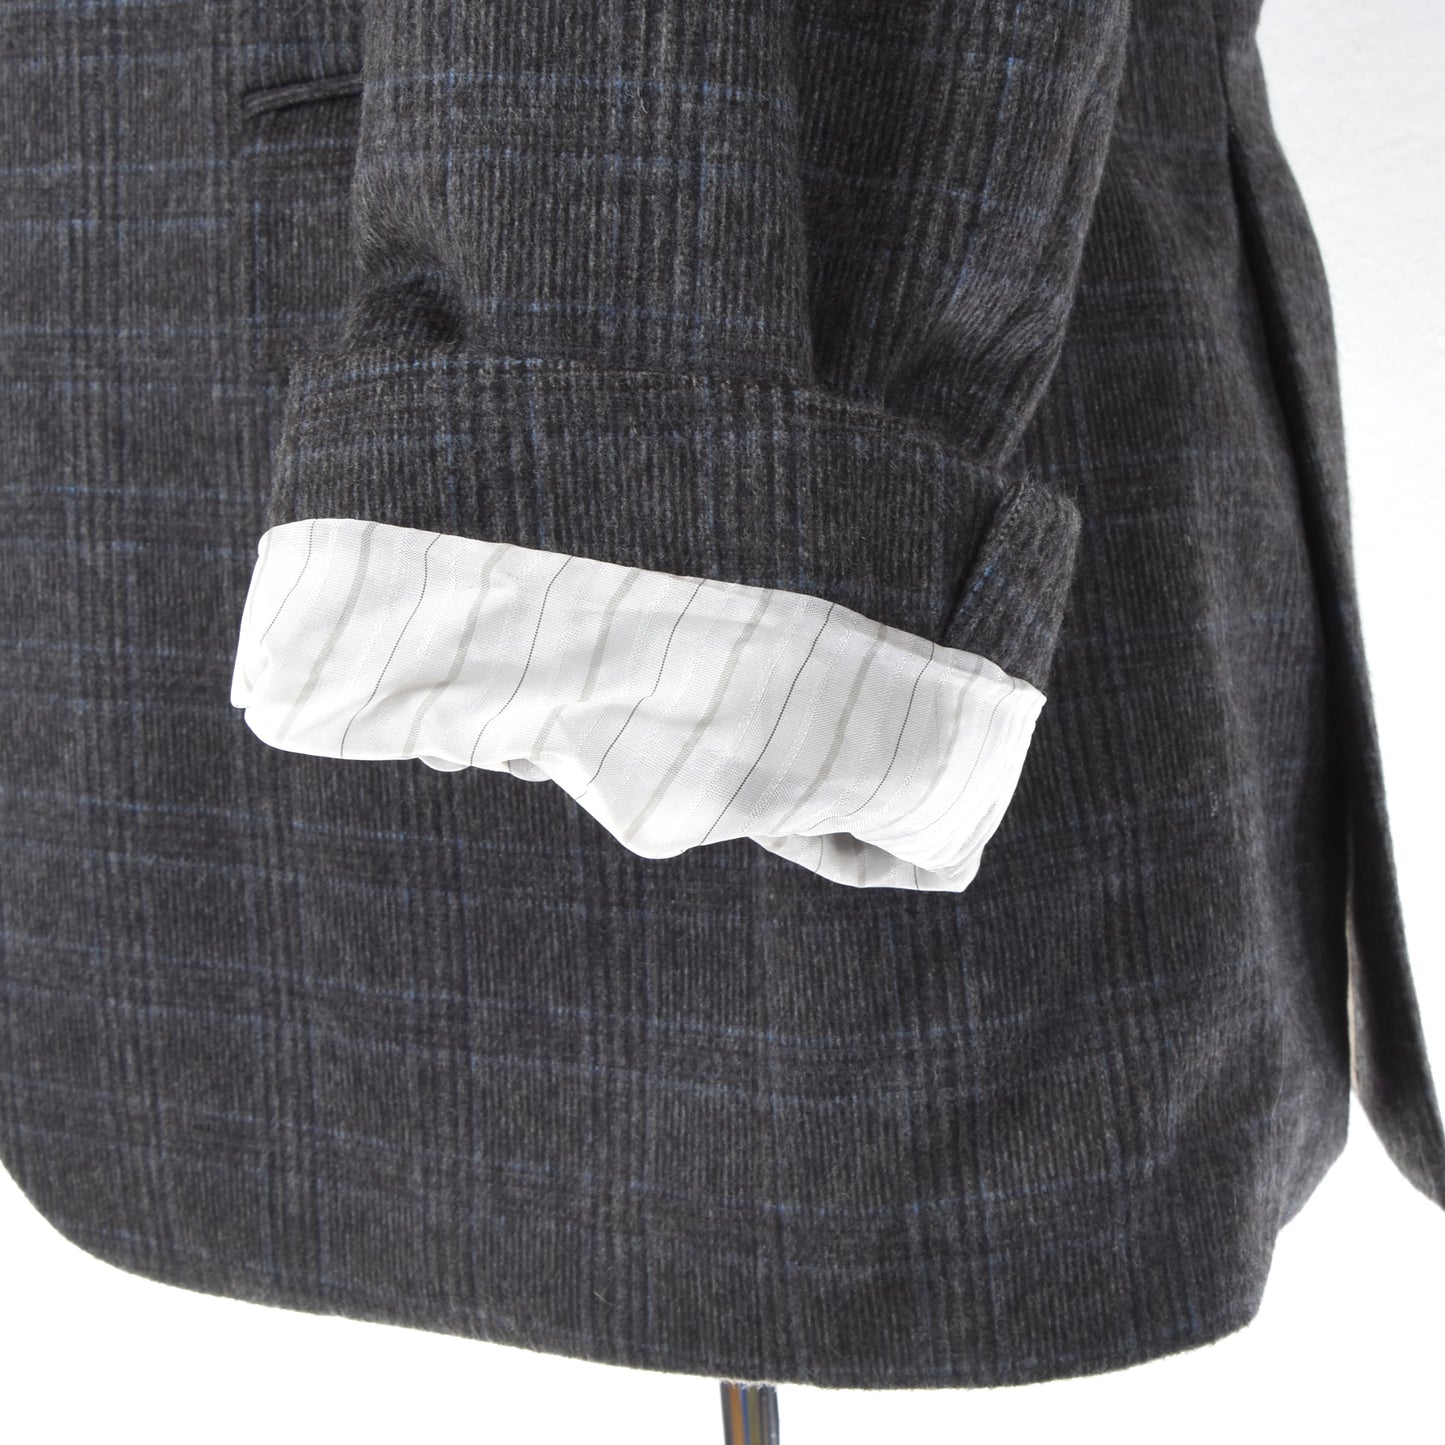 Hugo Boss Wool Blend Jacket Size 46 - Prince of Wales